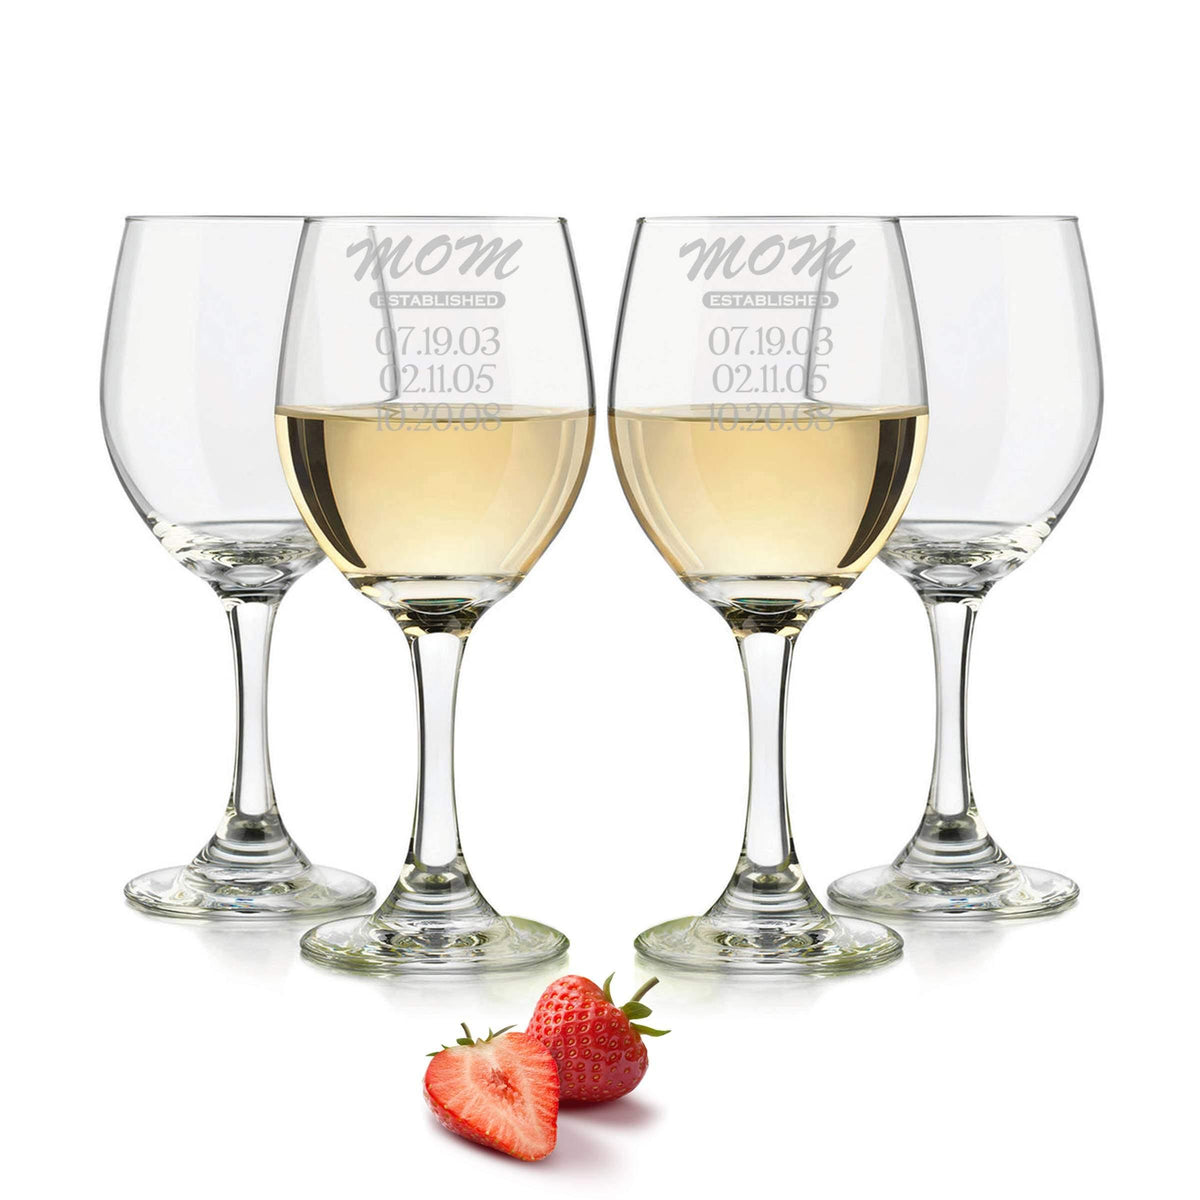 Mom established wine glass, Mom glass, custom wine glass, Personalized wine glasses, custom wine glasses Est. Date Engraved/Wine Glass 20oz. - RCH Gifts